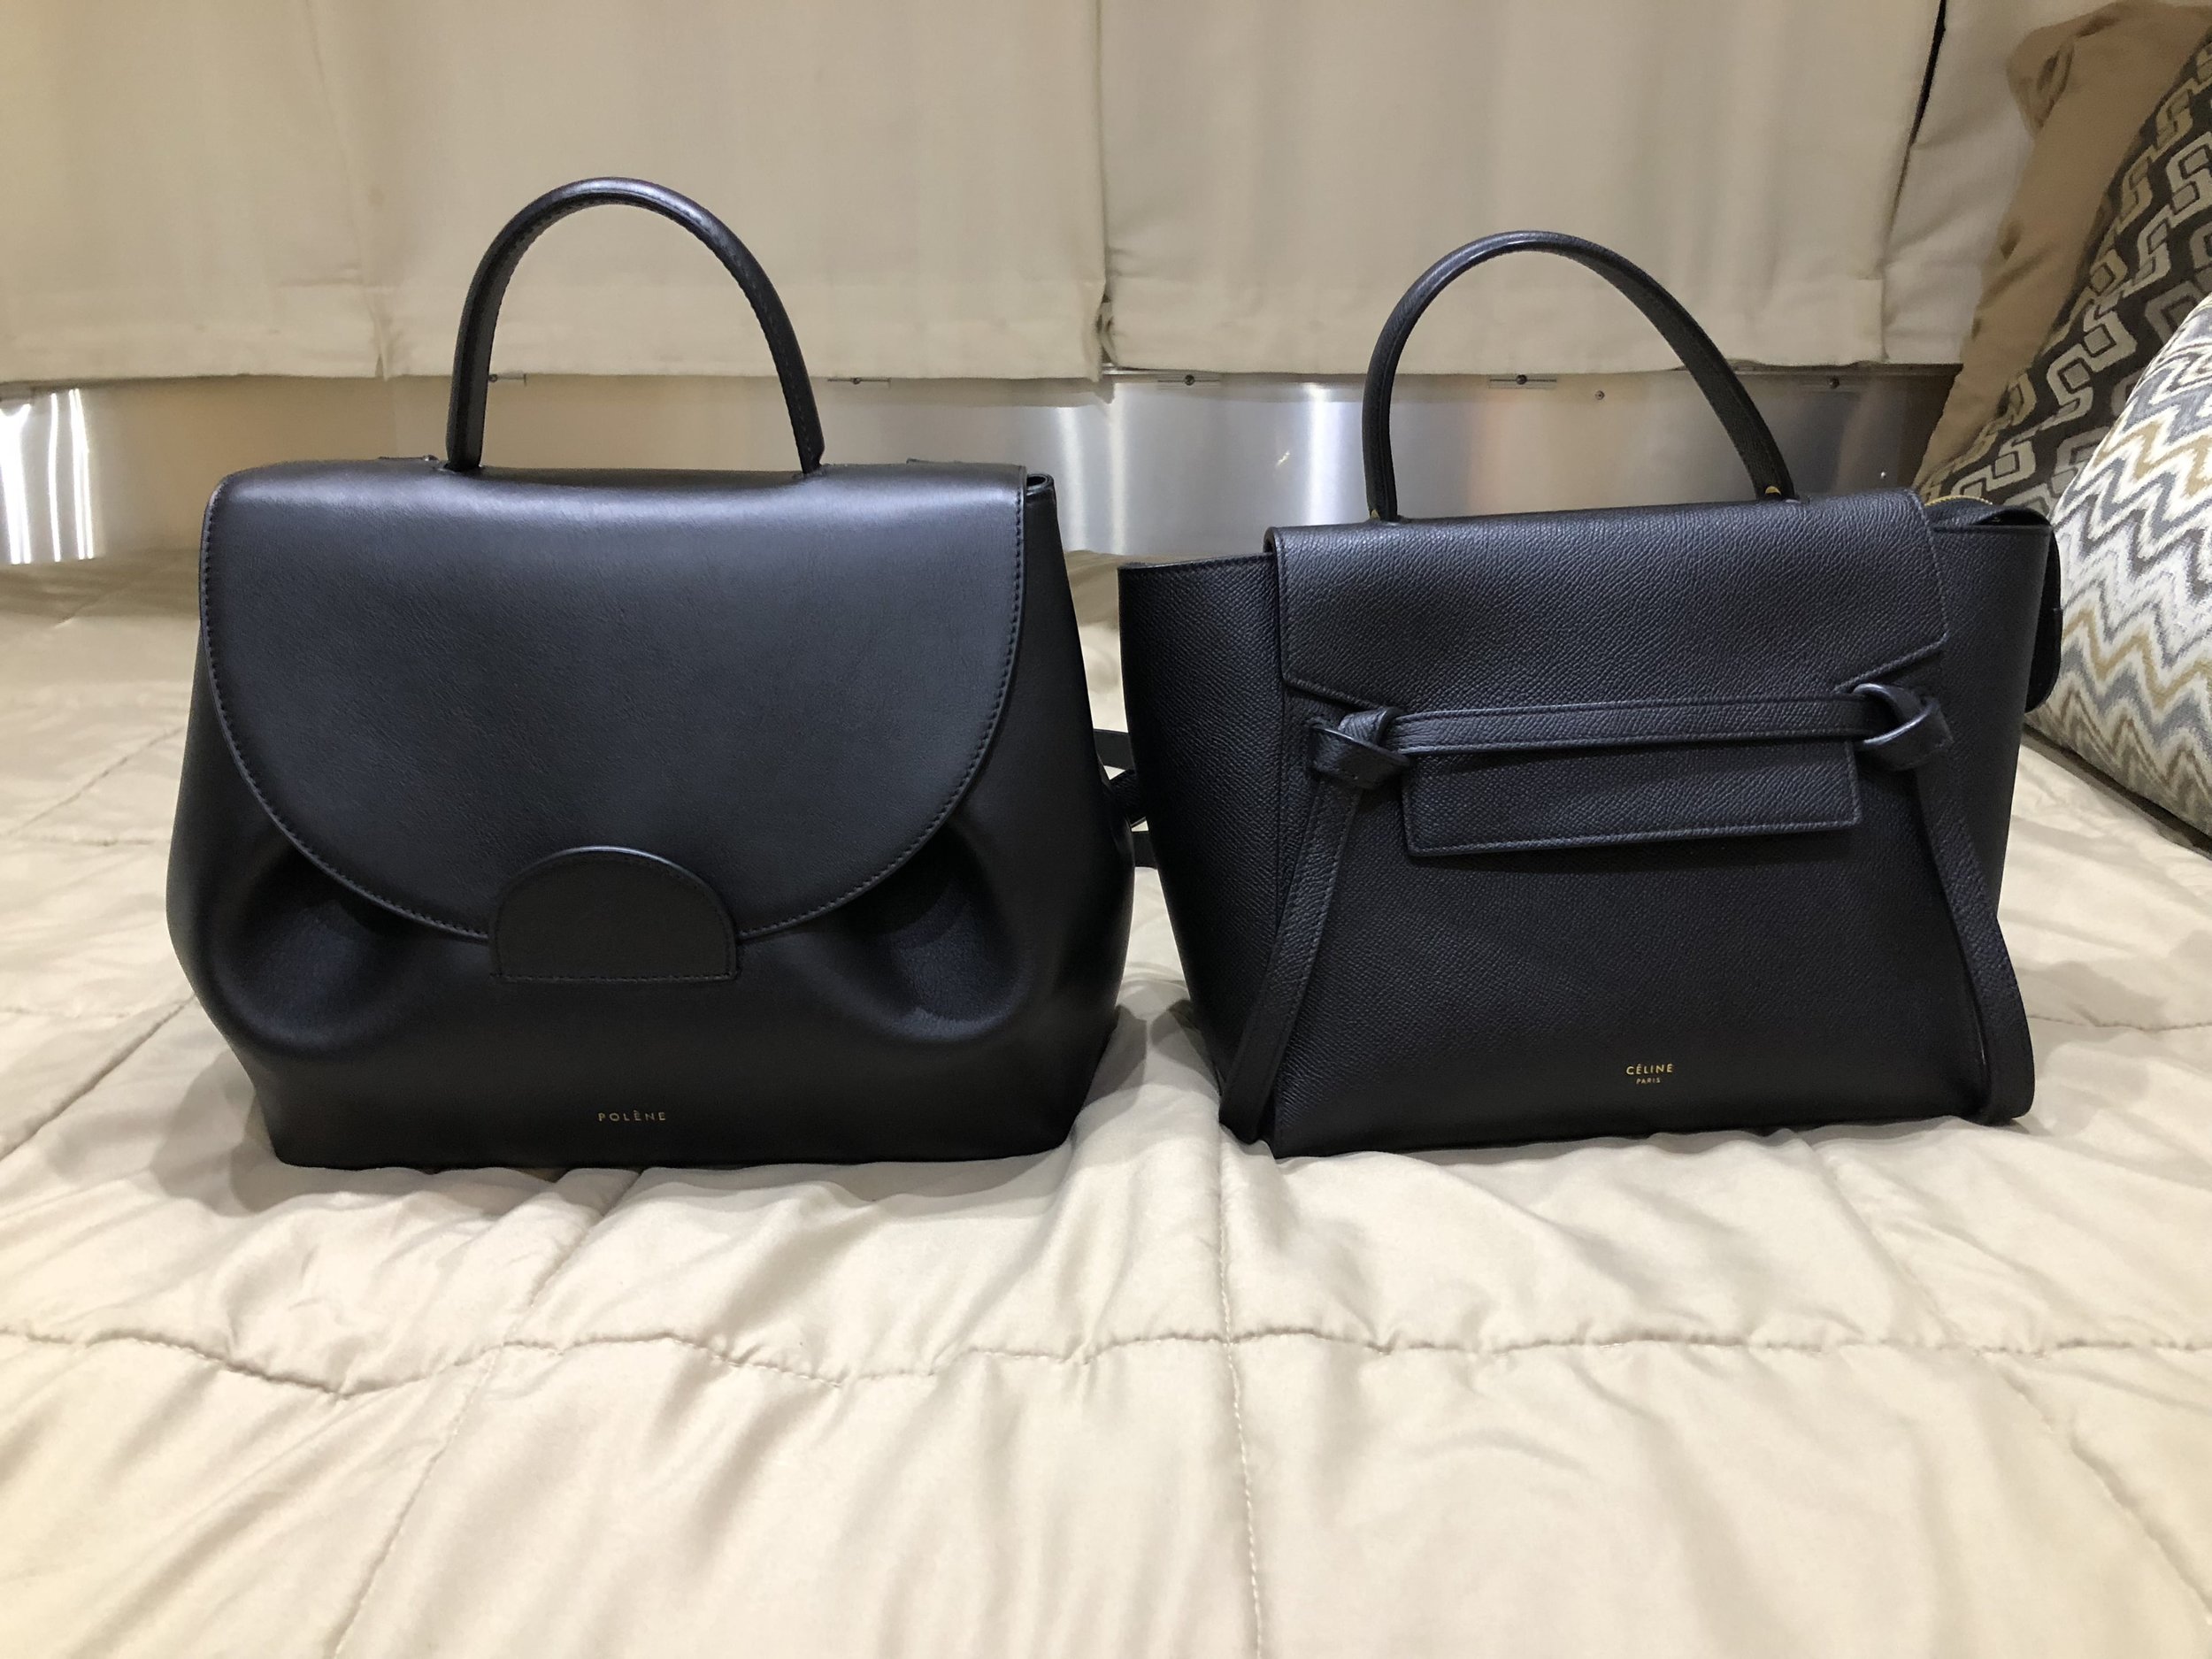 Handbag Comparison: Polene Numero Un Nano vs Celine Belt Bag Nano 